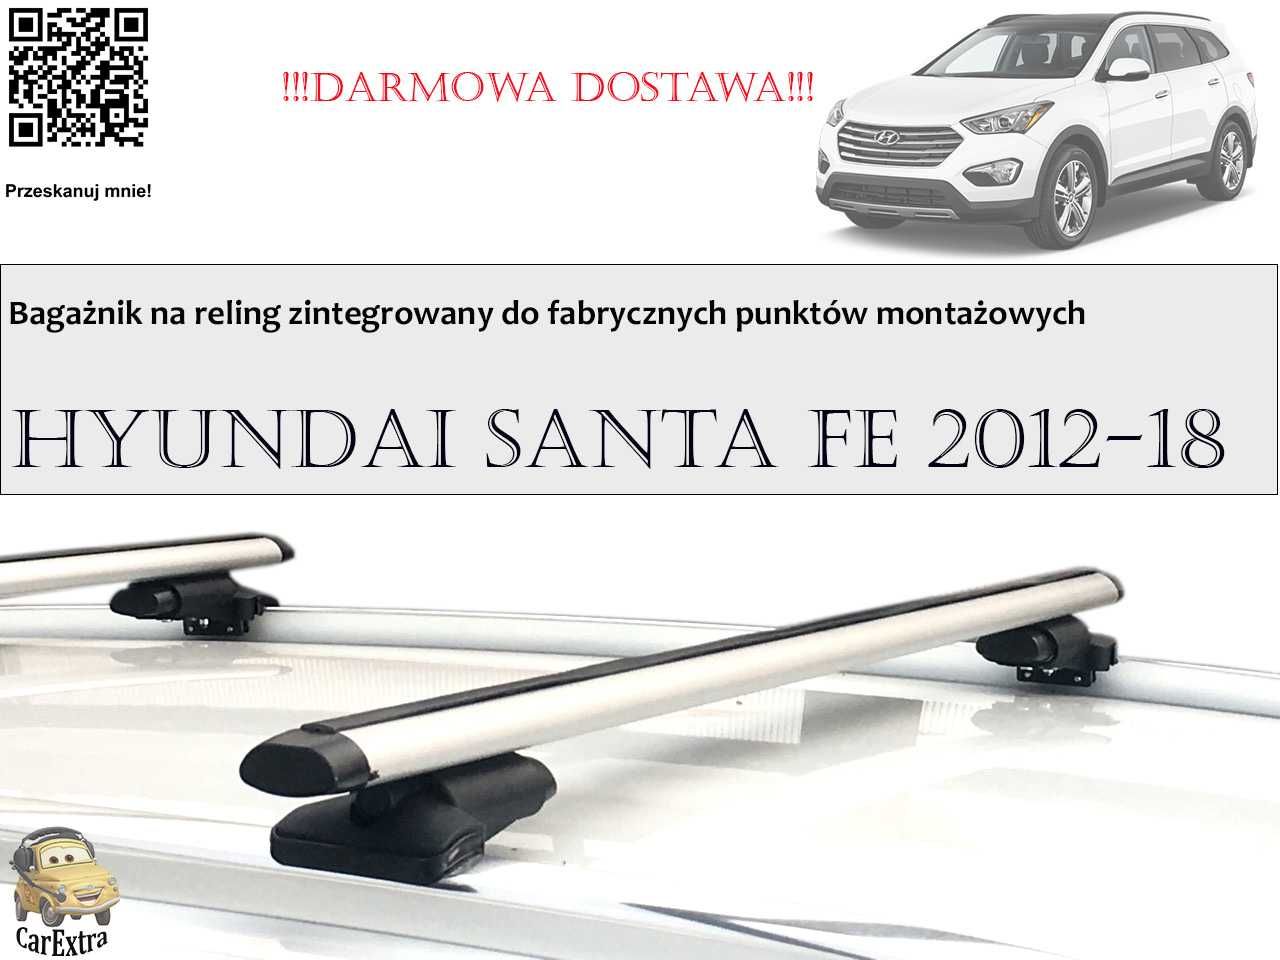 Bagażnik Dachowy Hyundai Santa Fe 2012-18